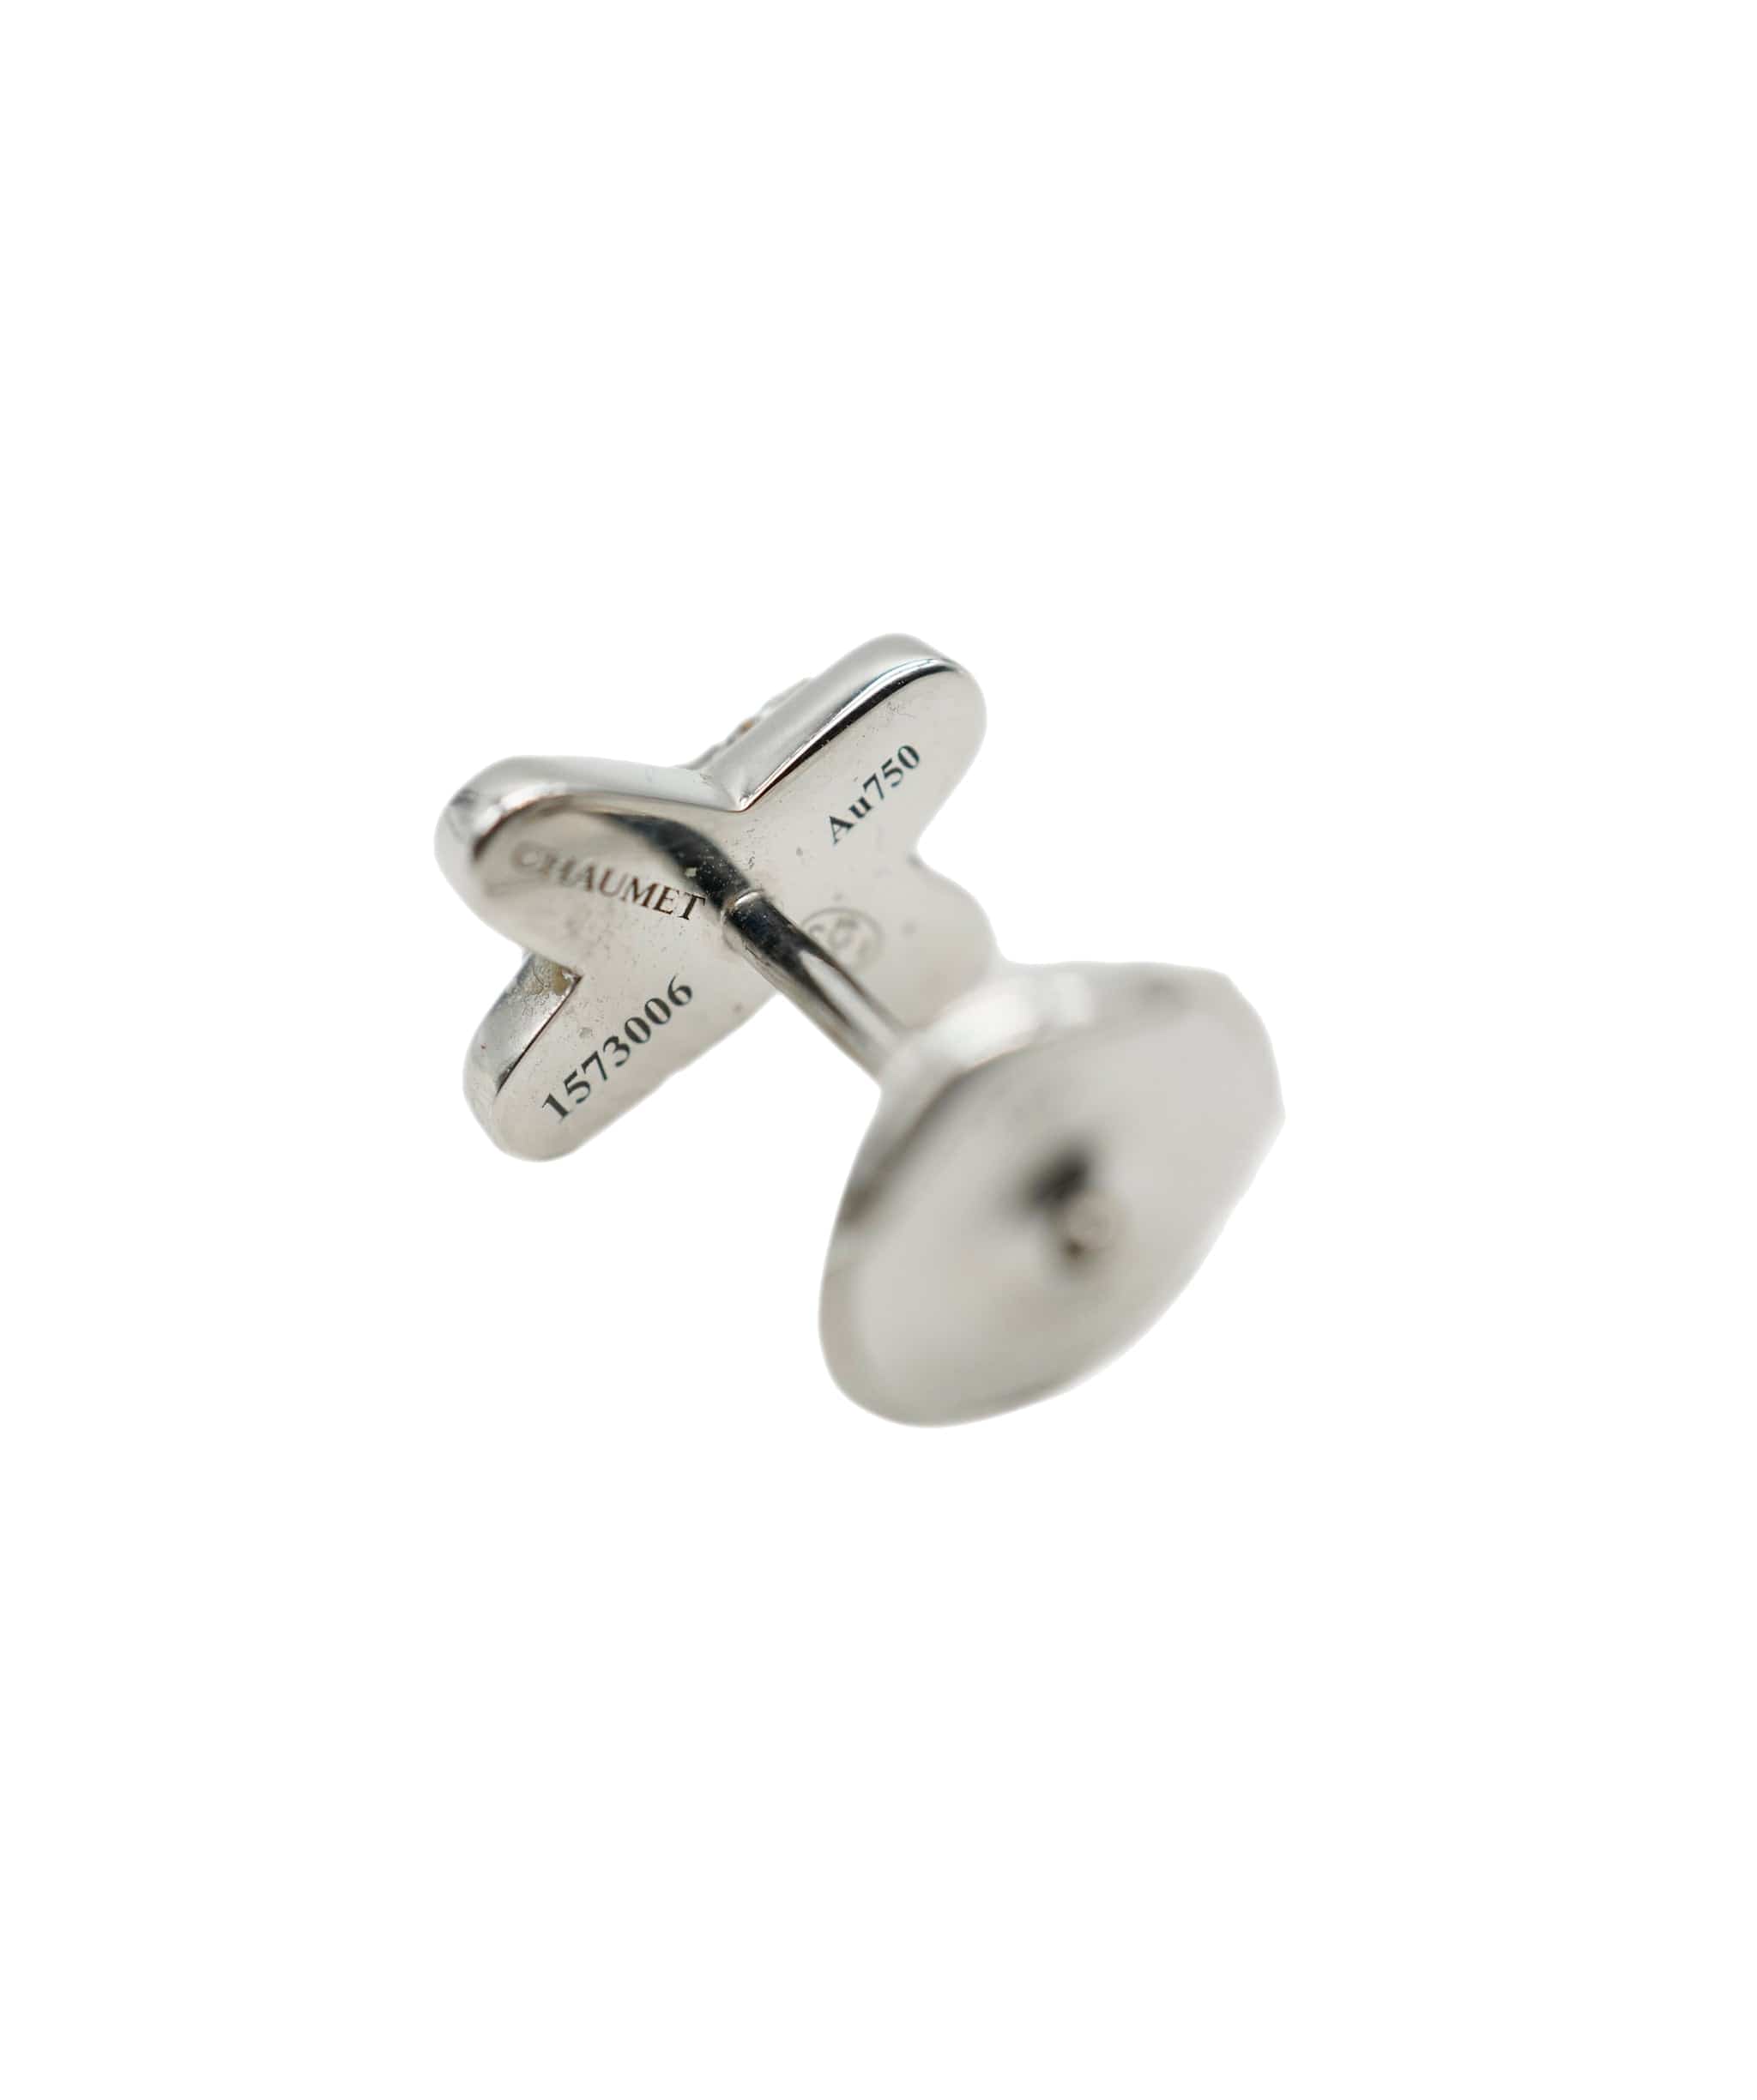 Chaumet Jeux de Liens Chaumet Jeux de Liens Diamond 18K White Gold Single Earring, 0.16 Ctw AHC1546